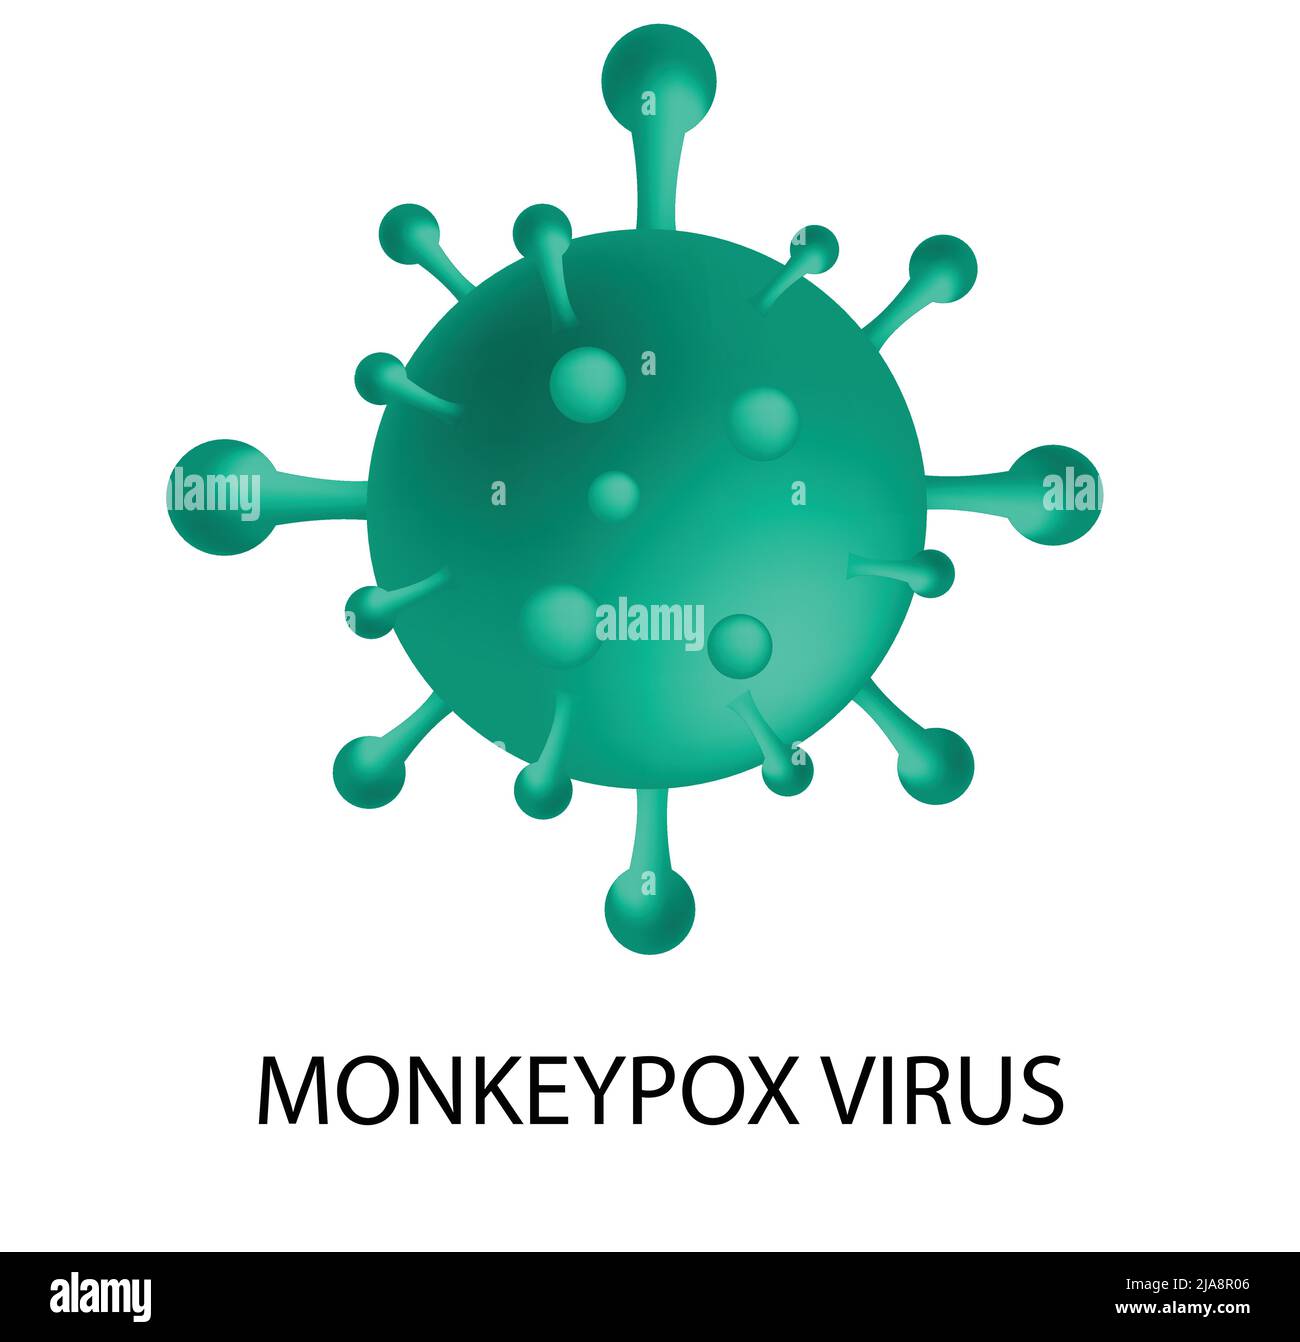 Monkeypox virus in green isolated on white background. vector illustration Stock Vector